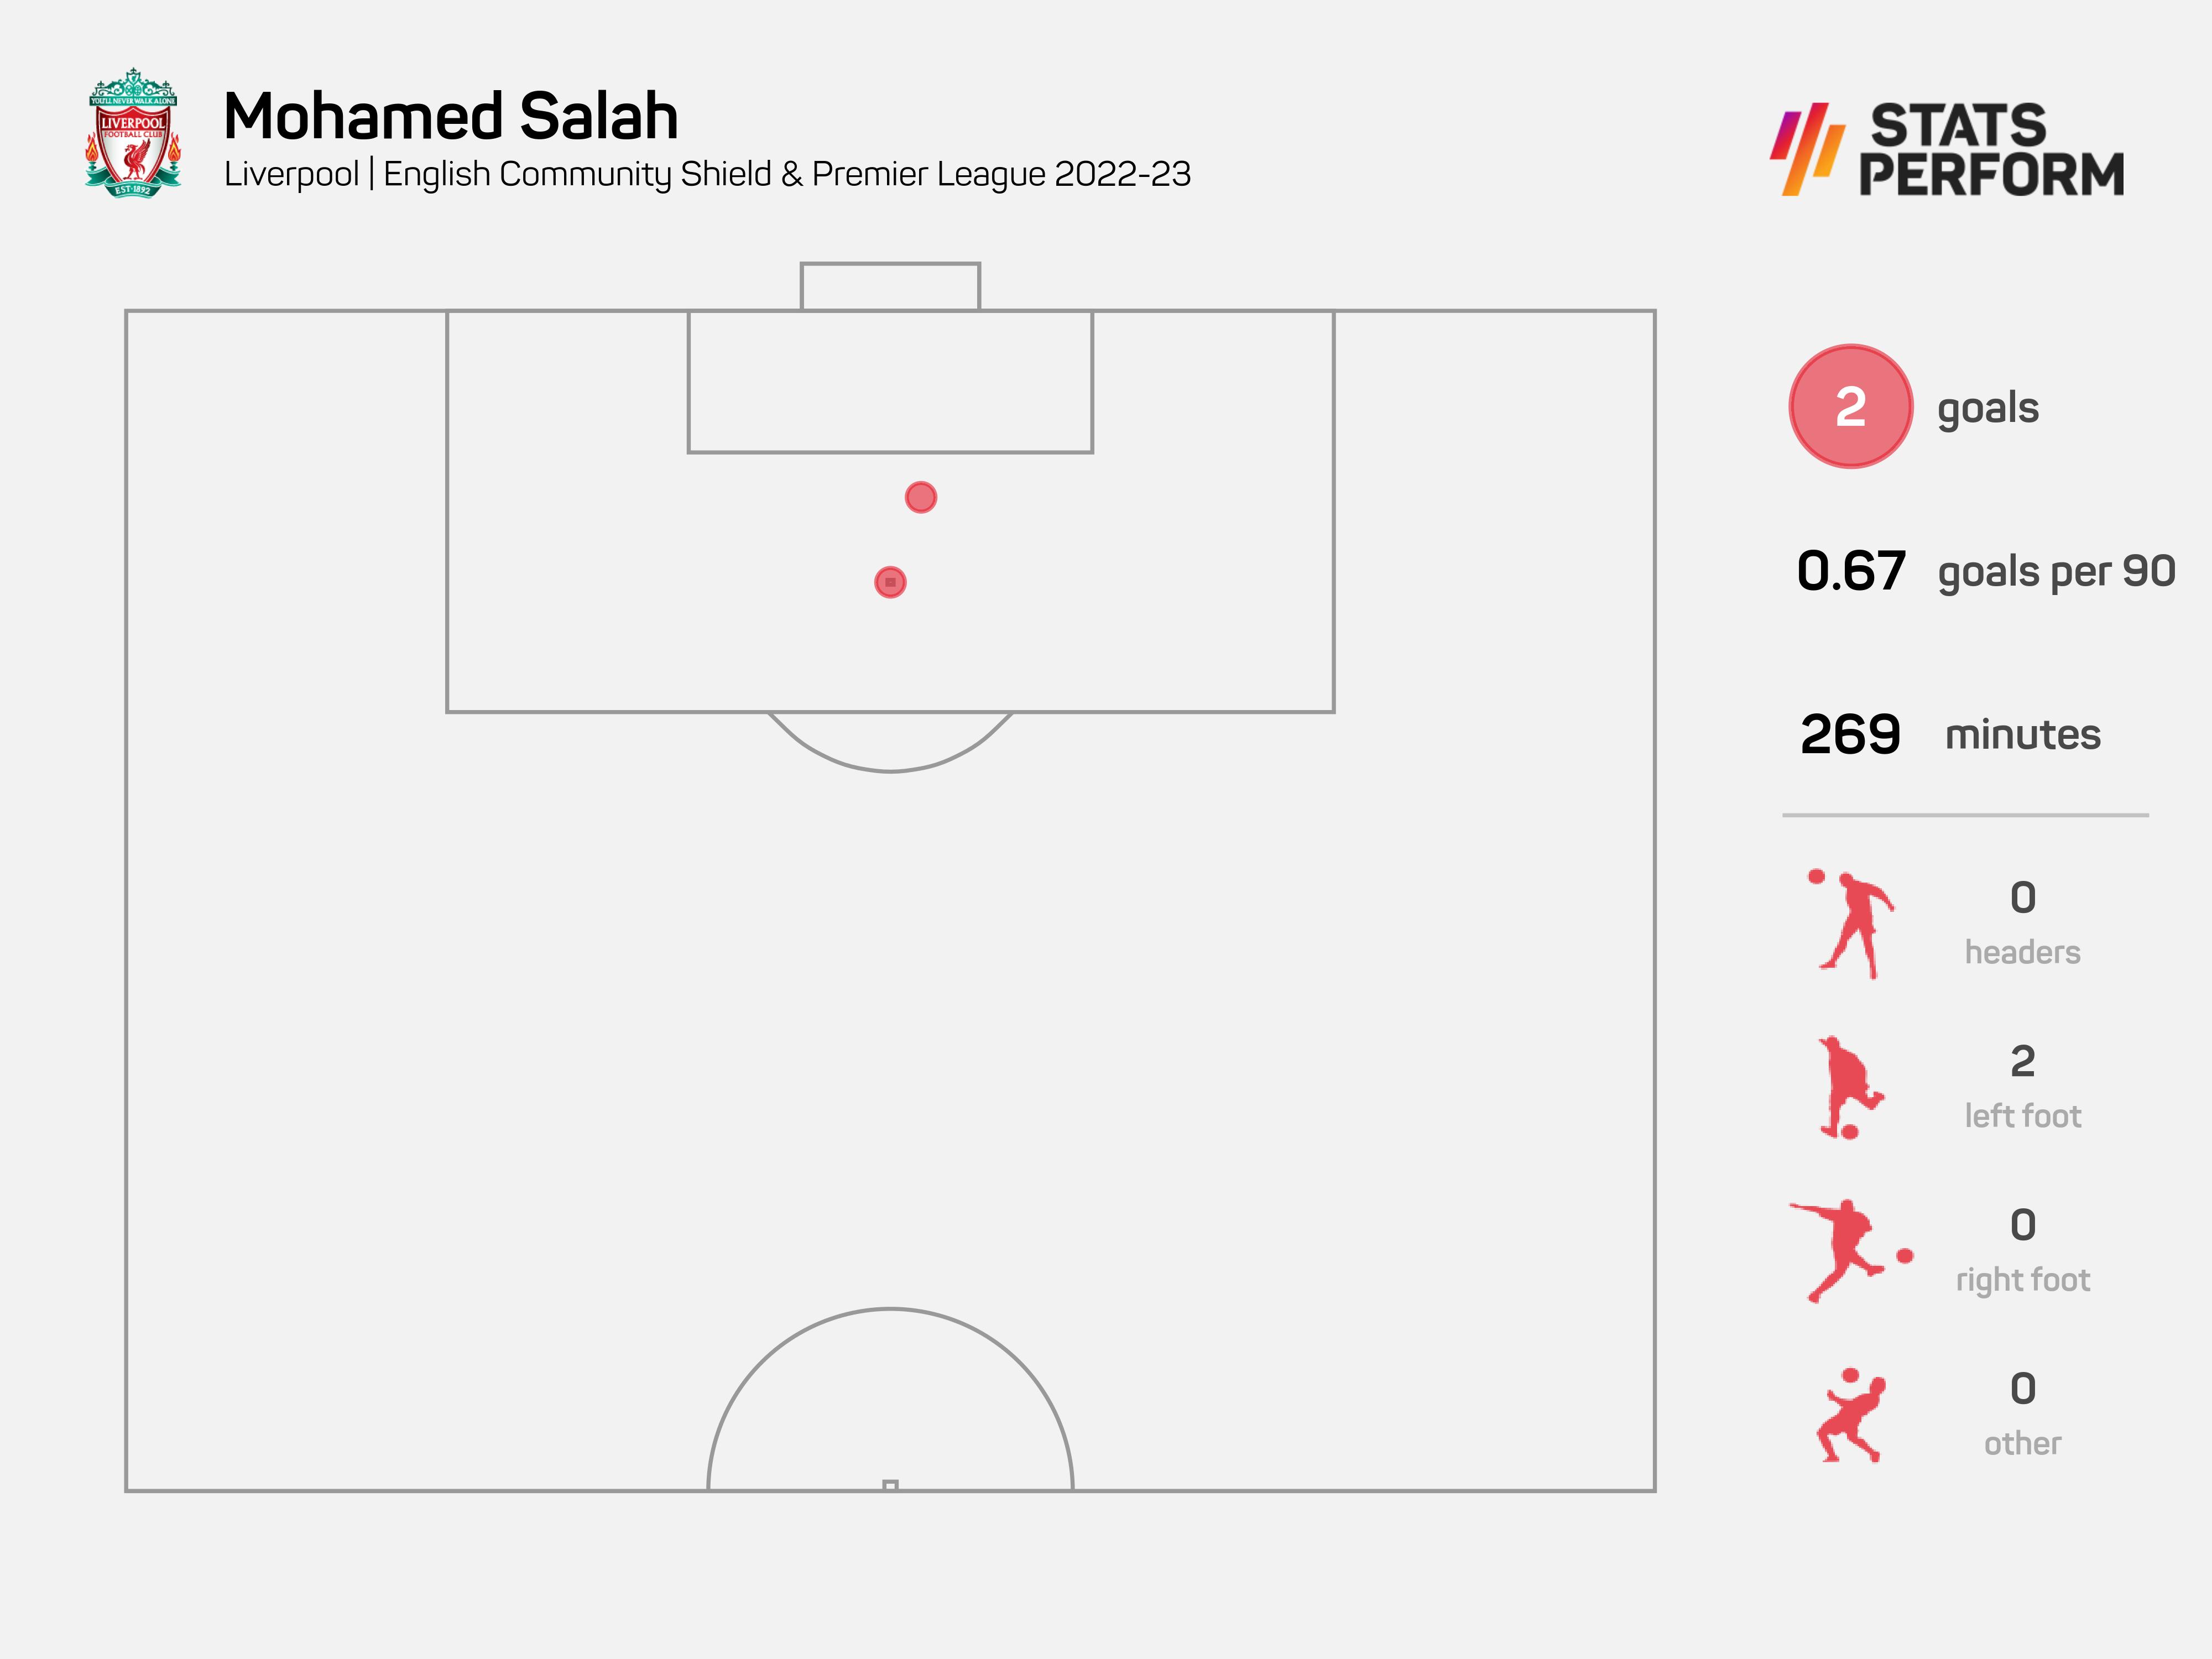 Mohamed Salah has two goals so far this season